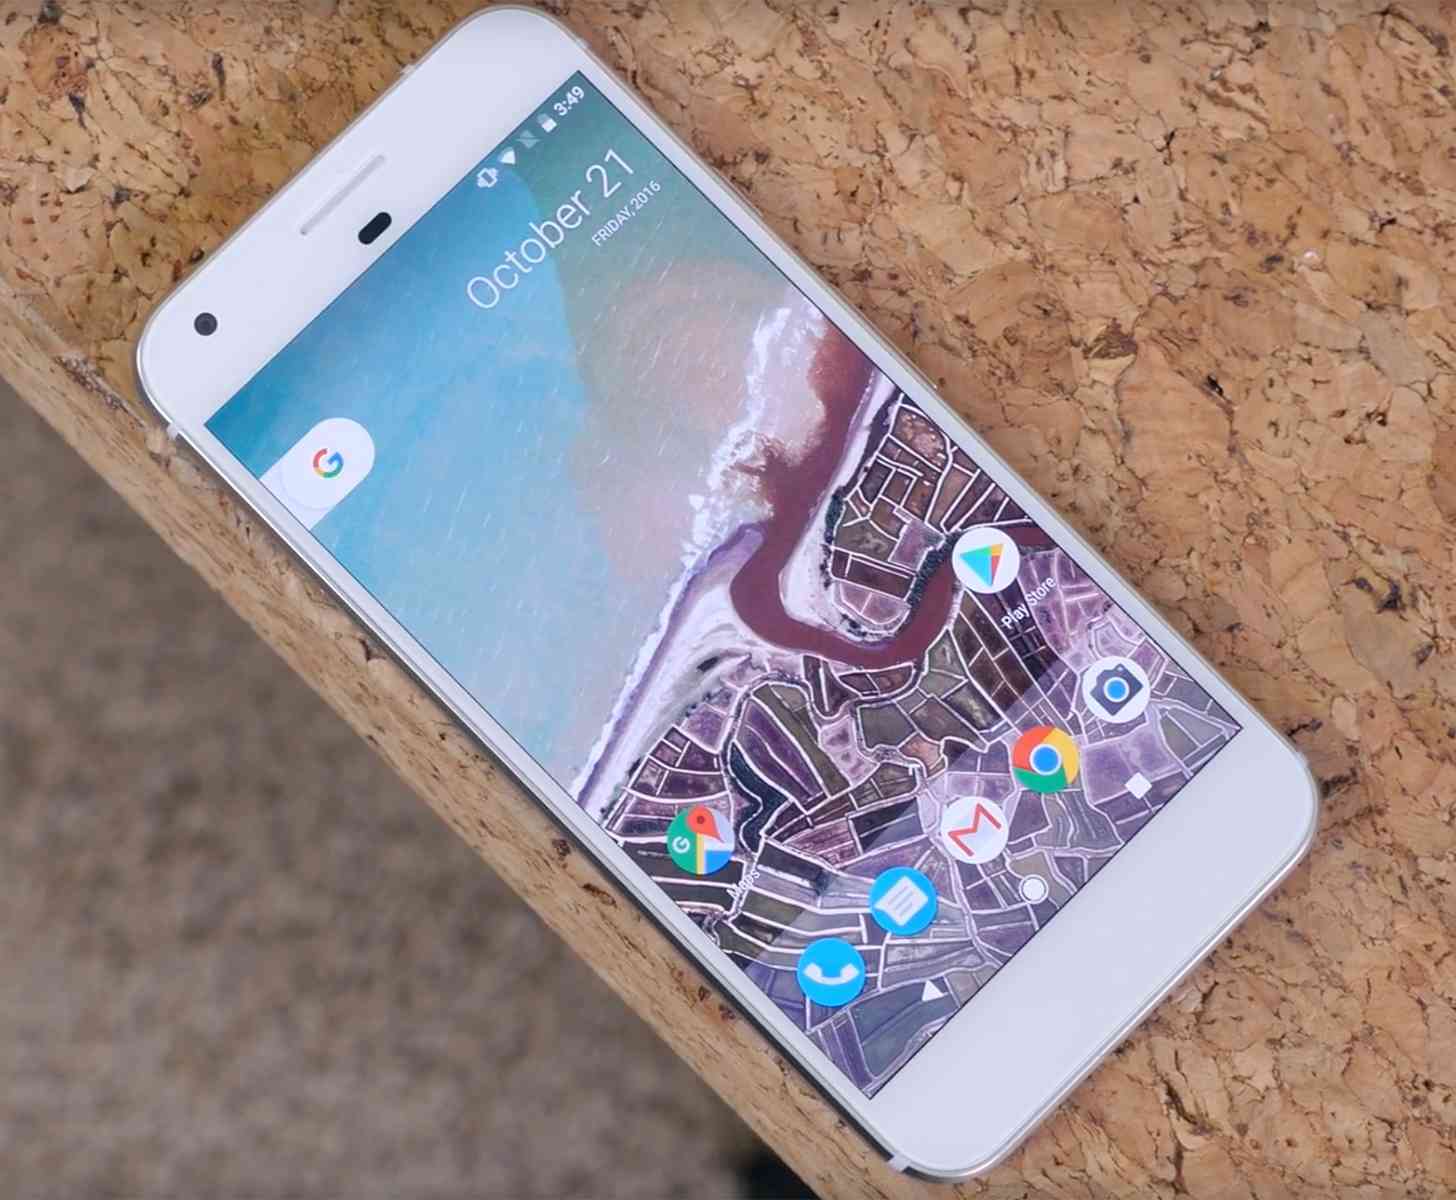 Google Pixel XL hands-on review